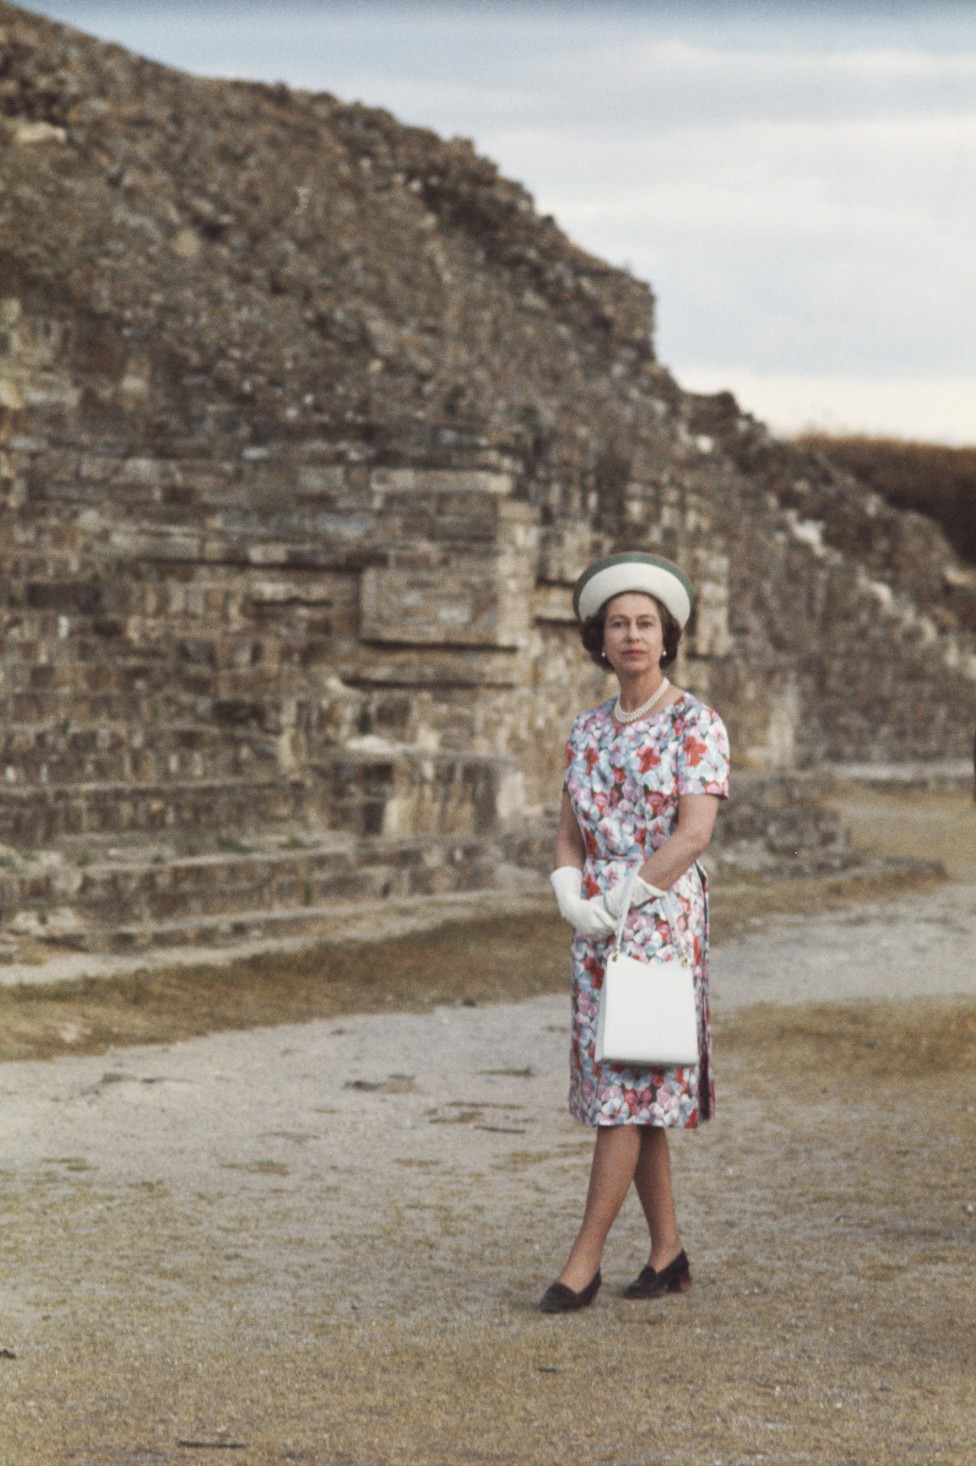 Queen Elizabeth II in Mexico